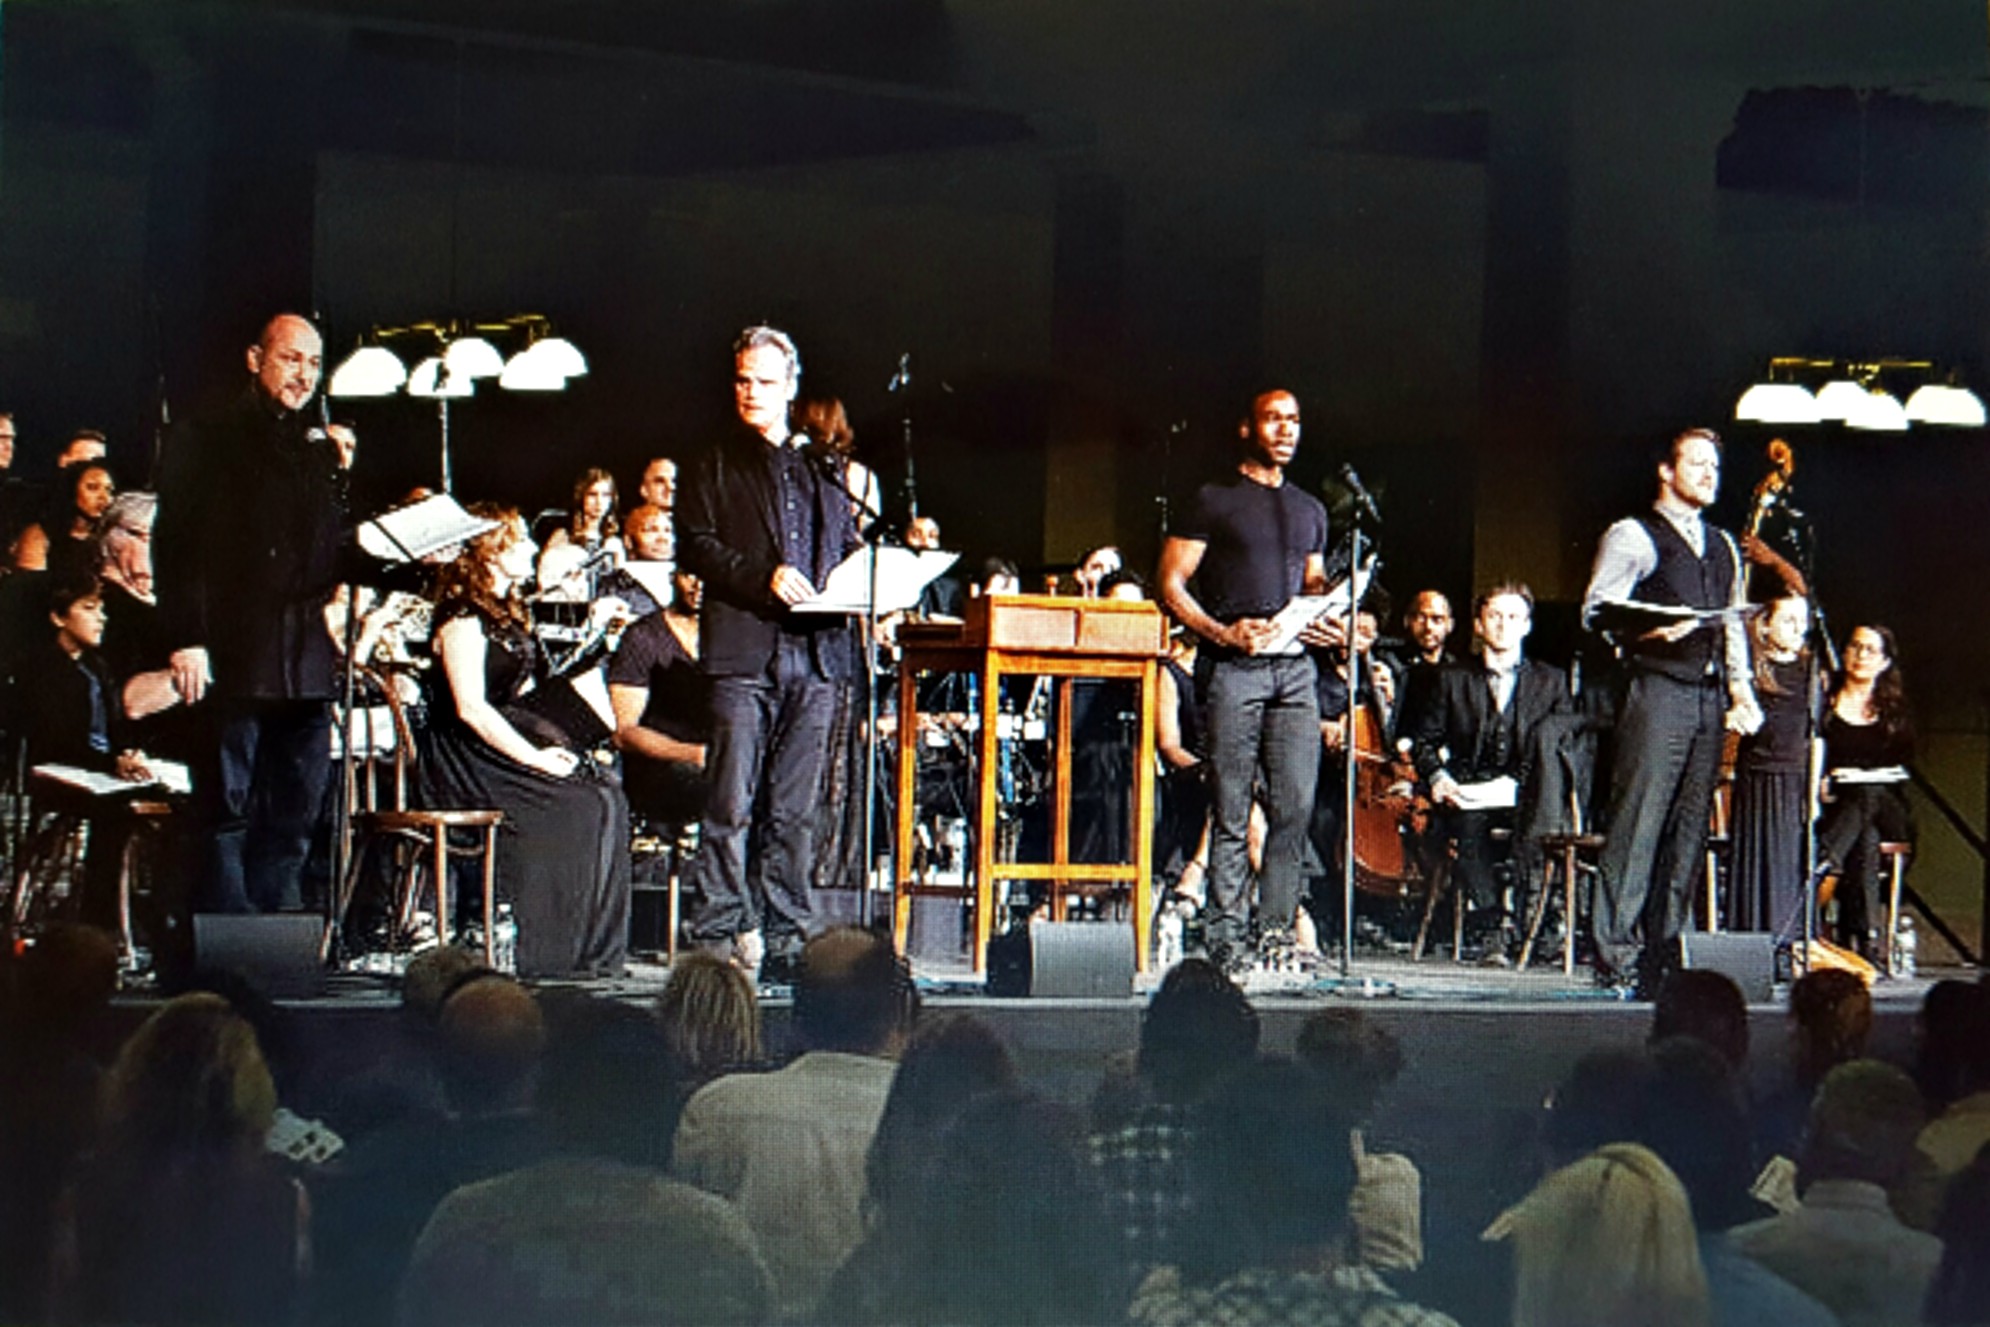 Philip Paul Kelly on stage during performance of "Ragtime on Ellis Island."